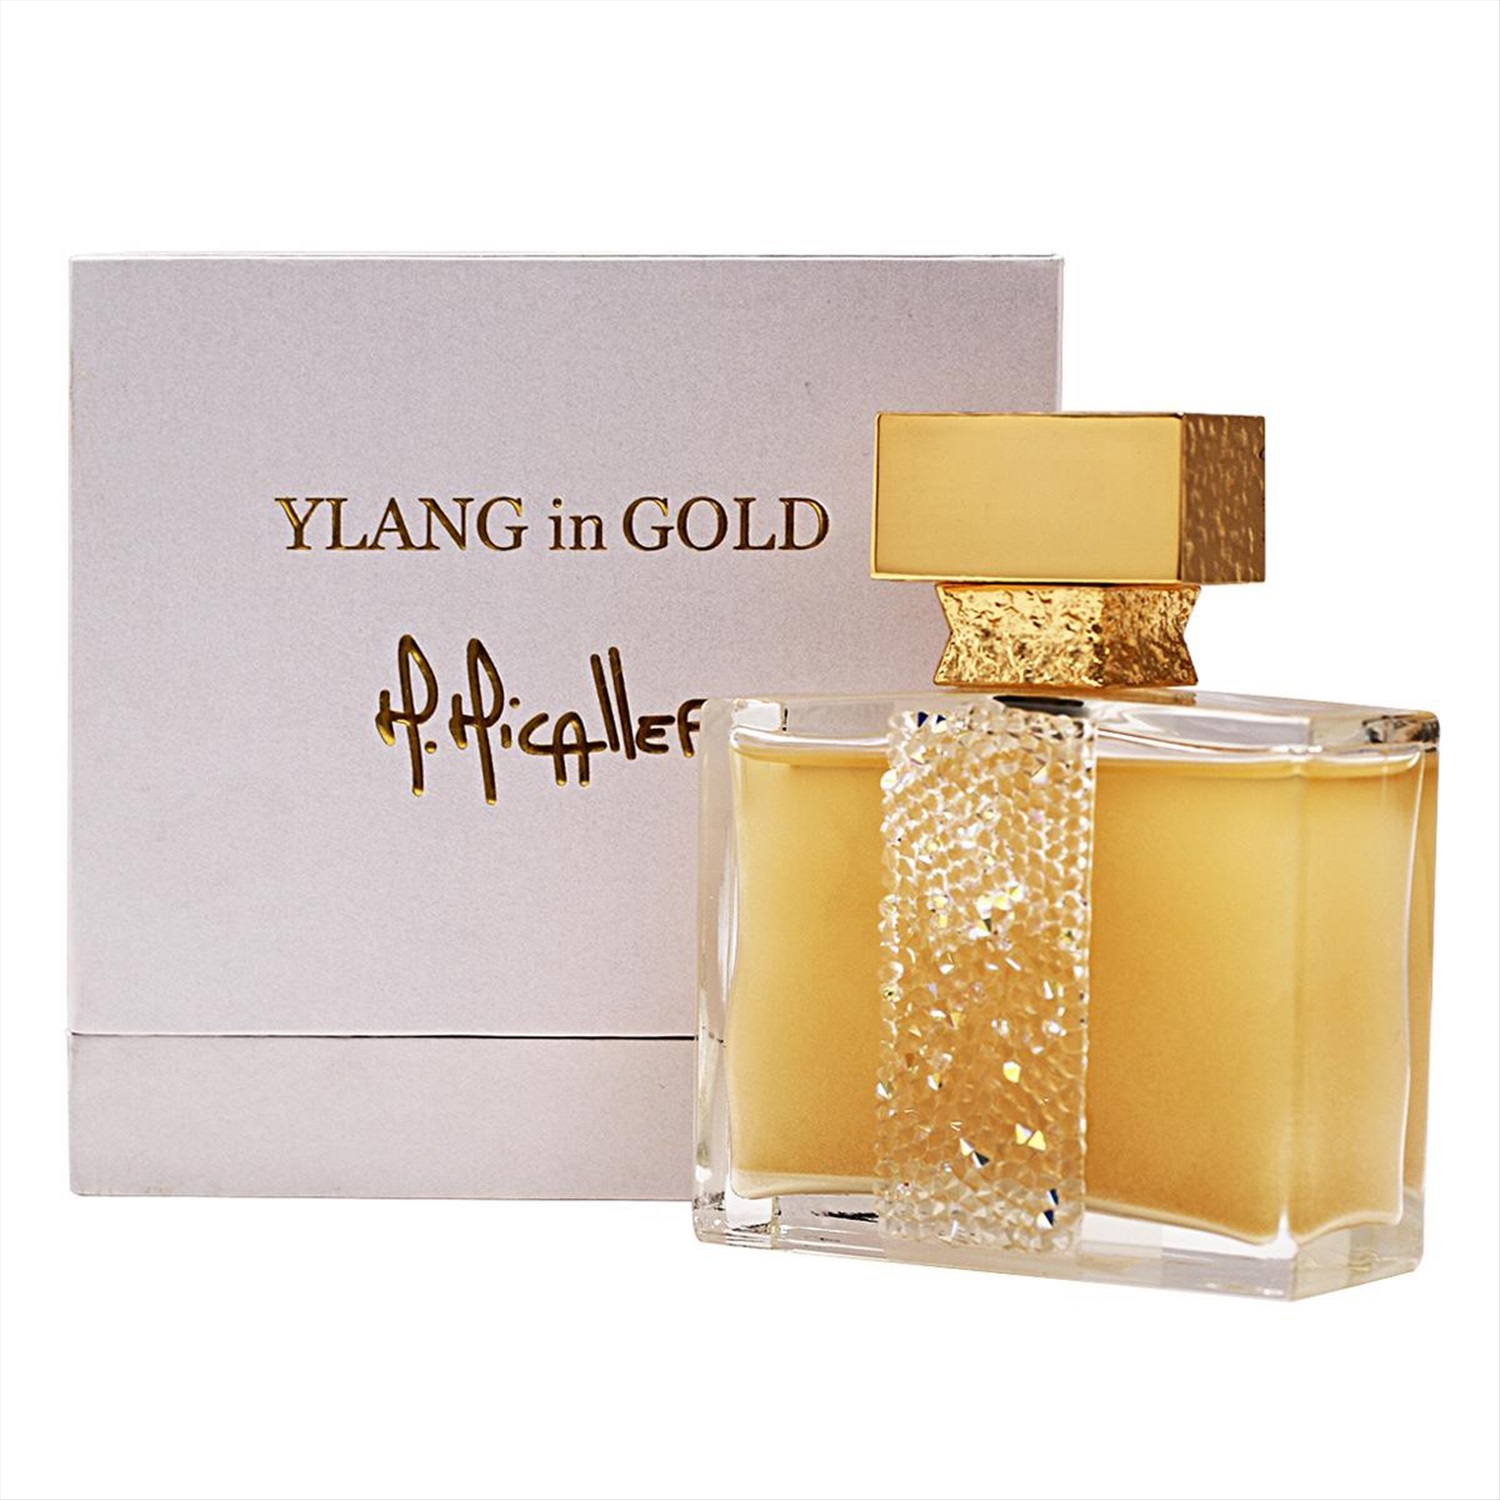 Ylang in gold. M. Micallef Ylang in Gold EDP, 100 ml. M. Micallef Ylang in Gold Nectar. Аромат m.Micallef Ylang in Gold. M.Micallef Ylang in Gold EDP (W) 30ml.